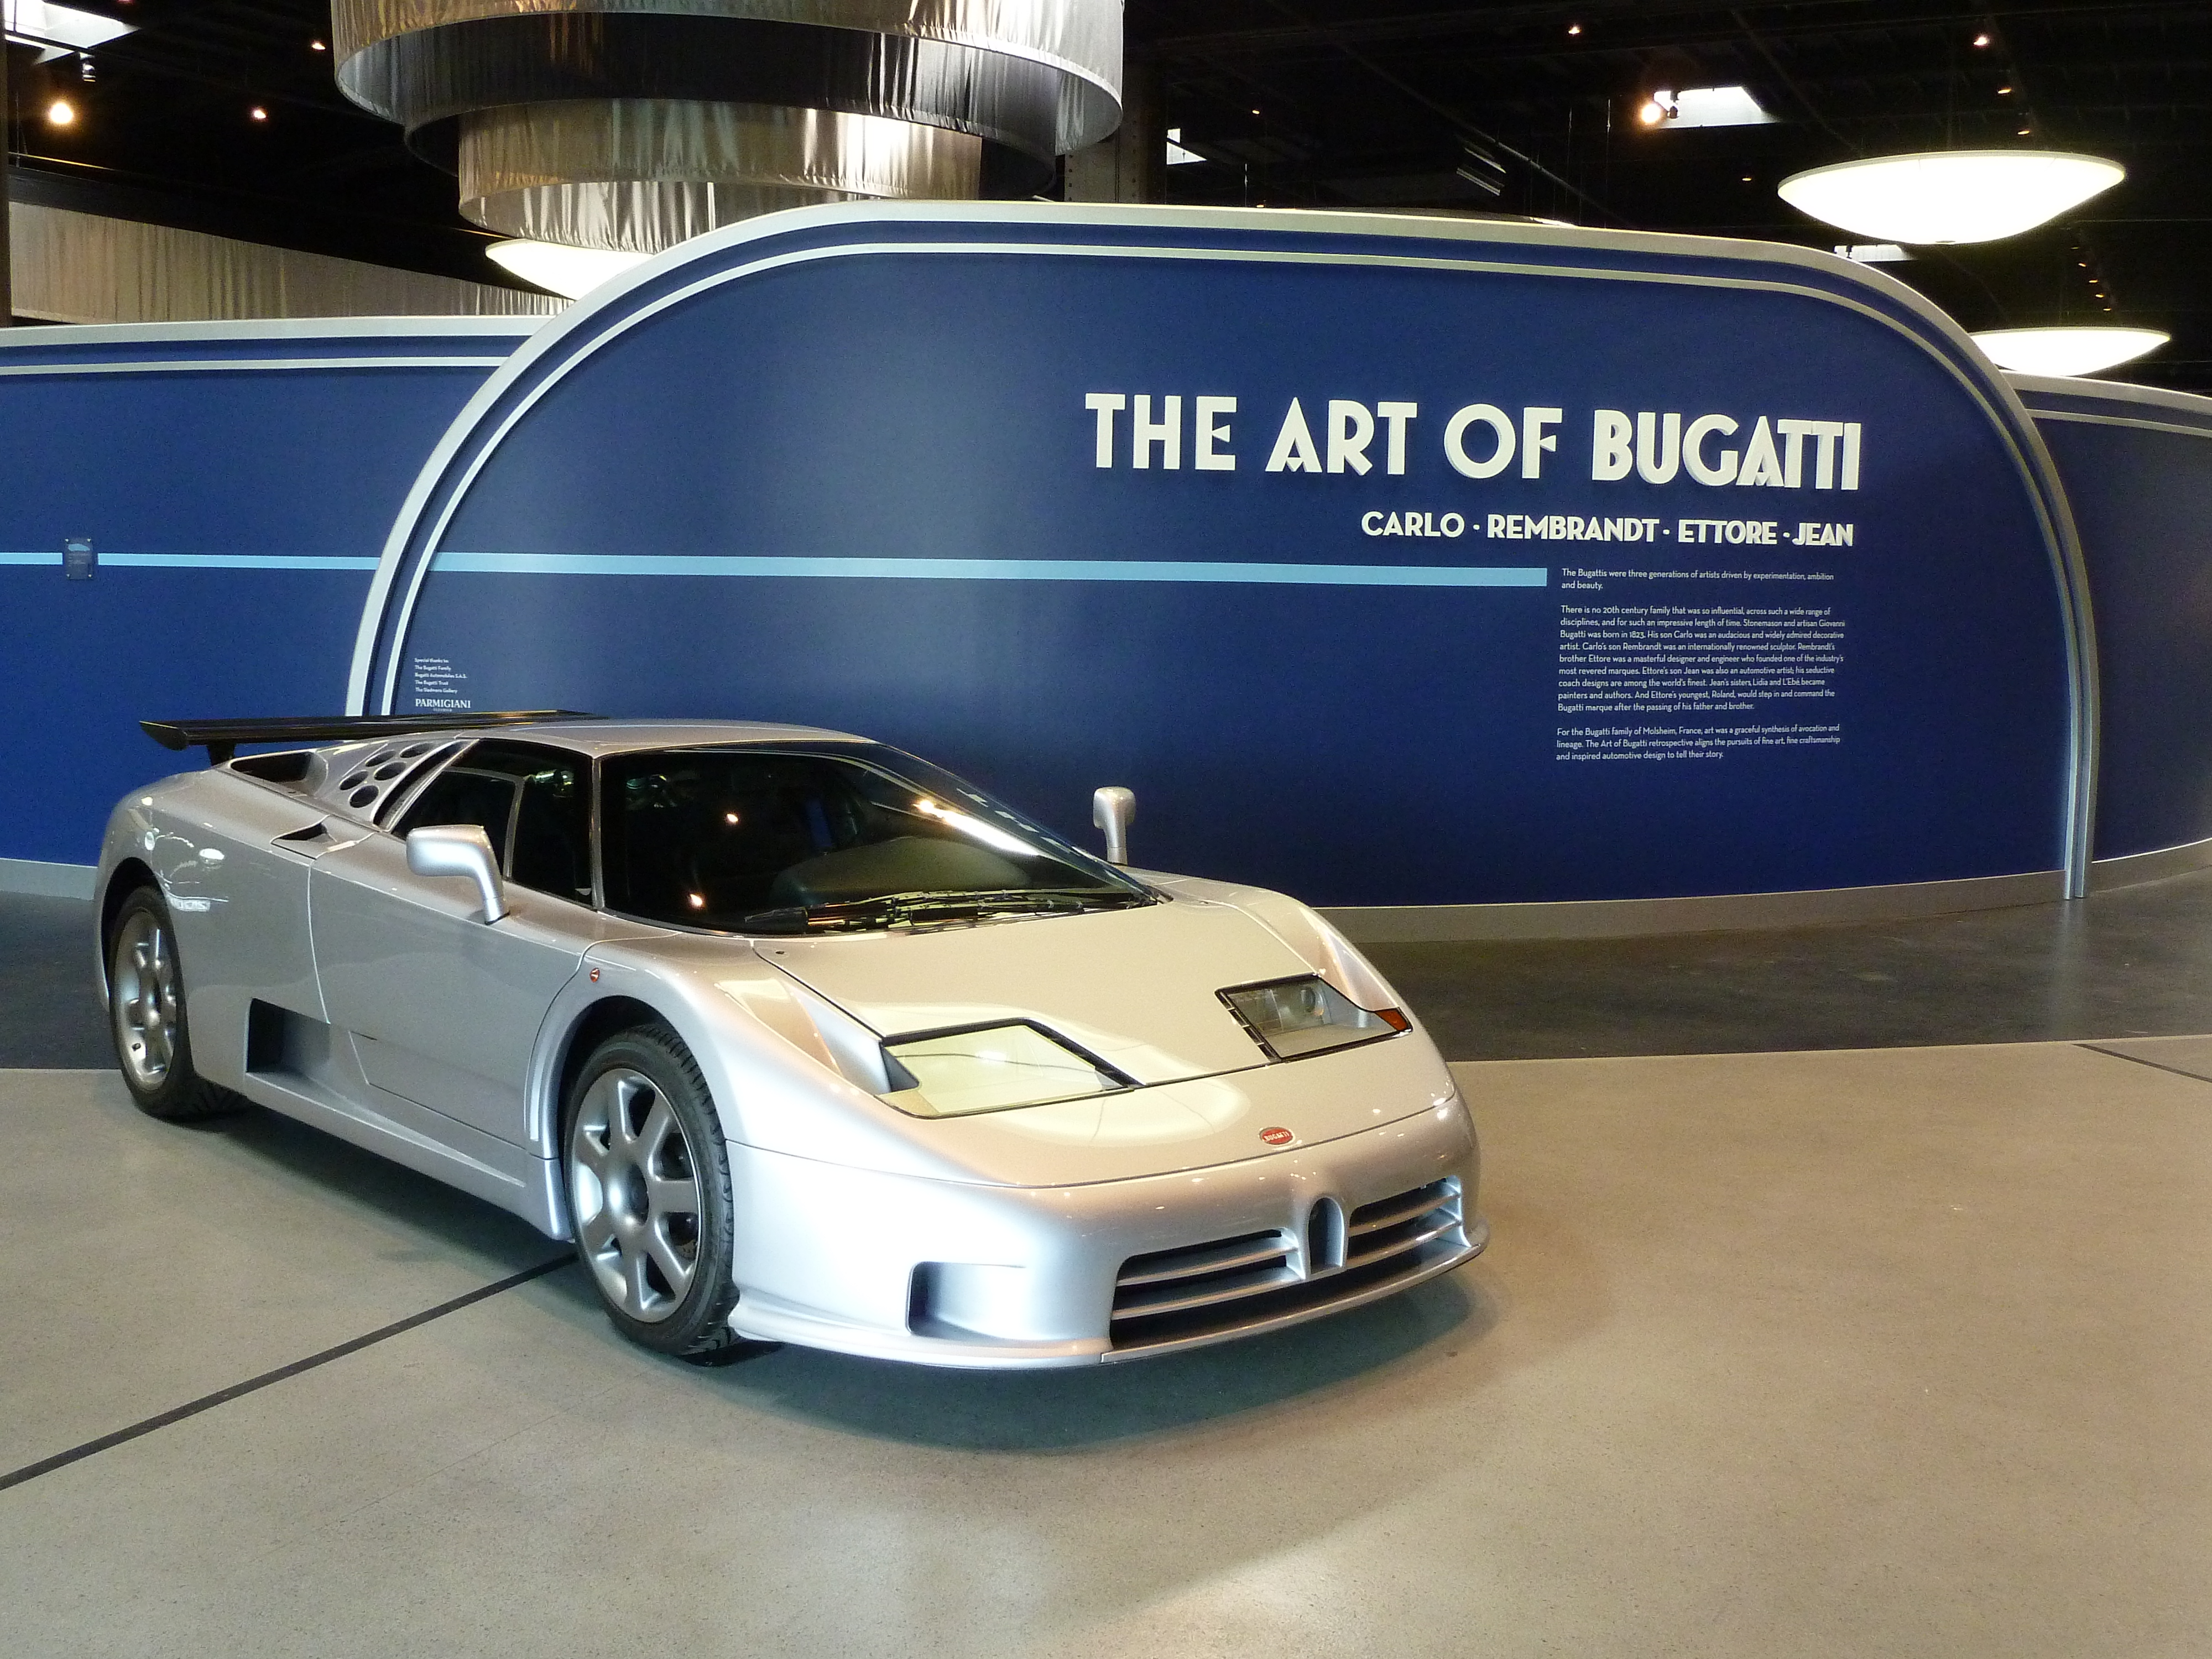 Mullin Automotive Museum Hosts Rare and Fabulous Bugatti Art Exhibit